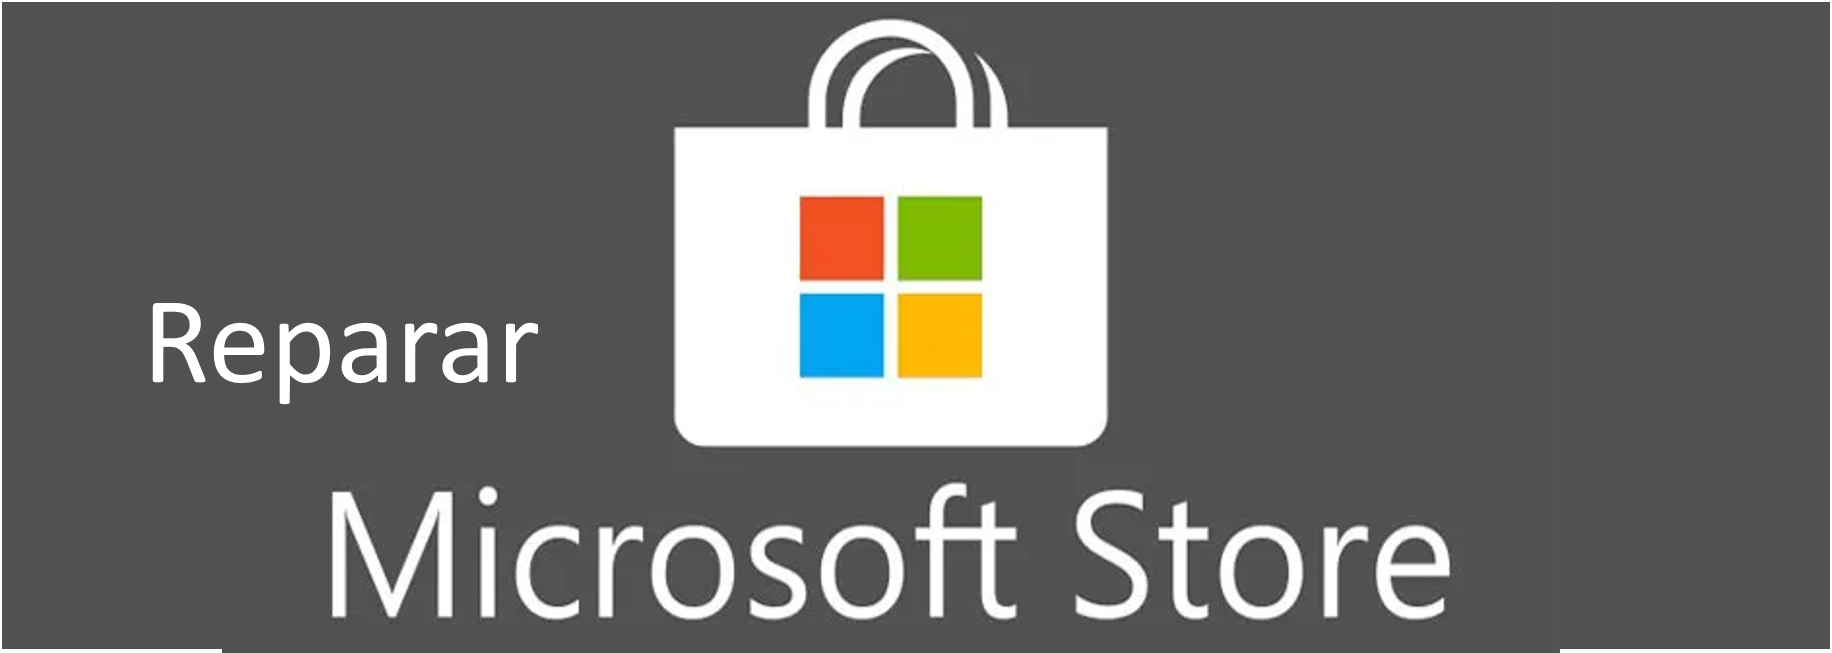 En este momento estás viendo Agregar o Reparar Tienda Microsoft o Microsoft Store en Windows 10